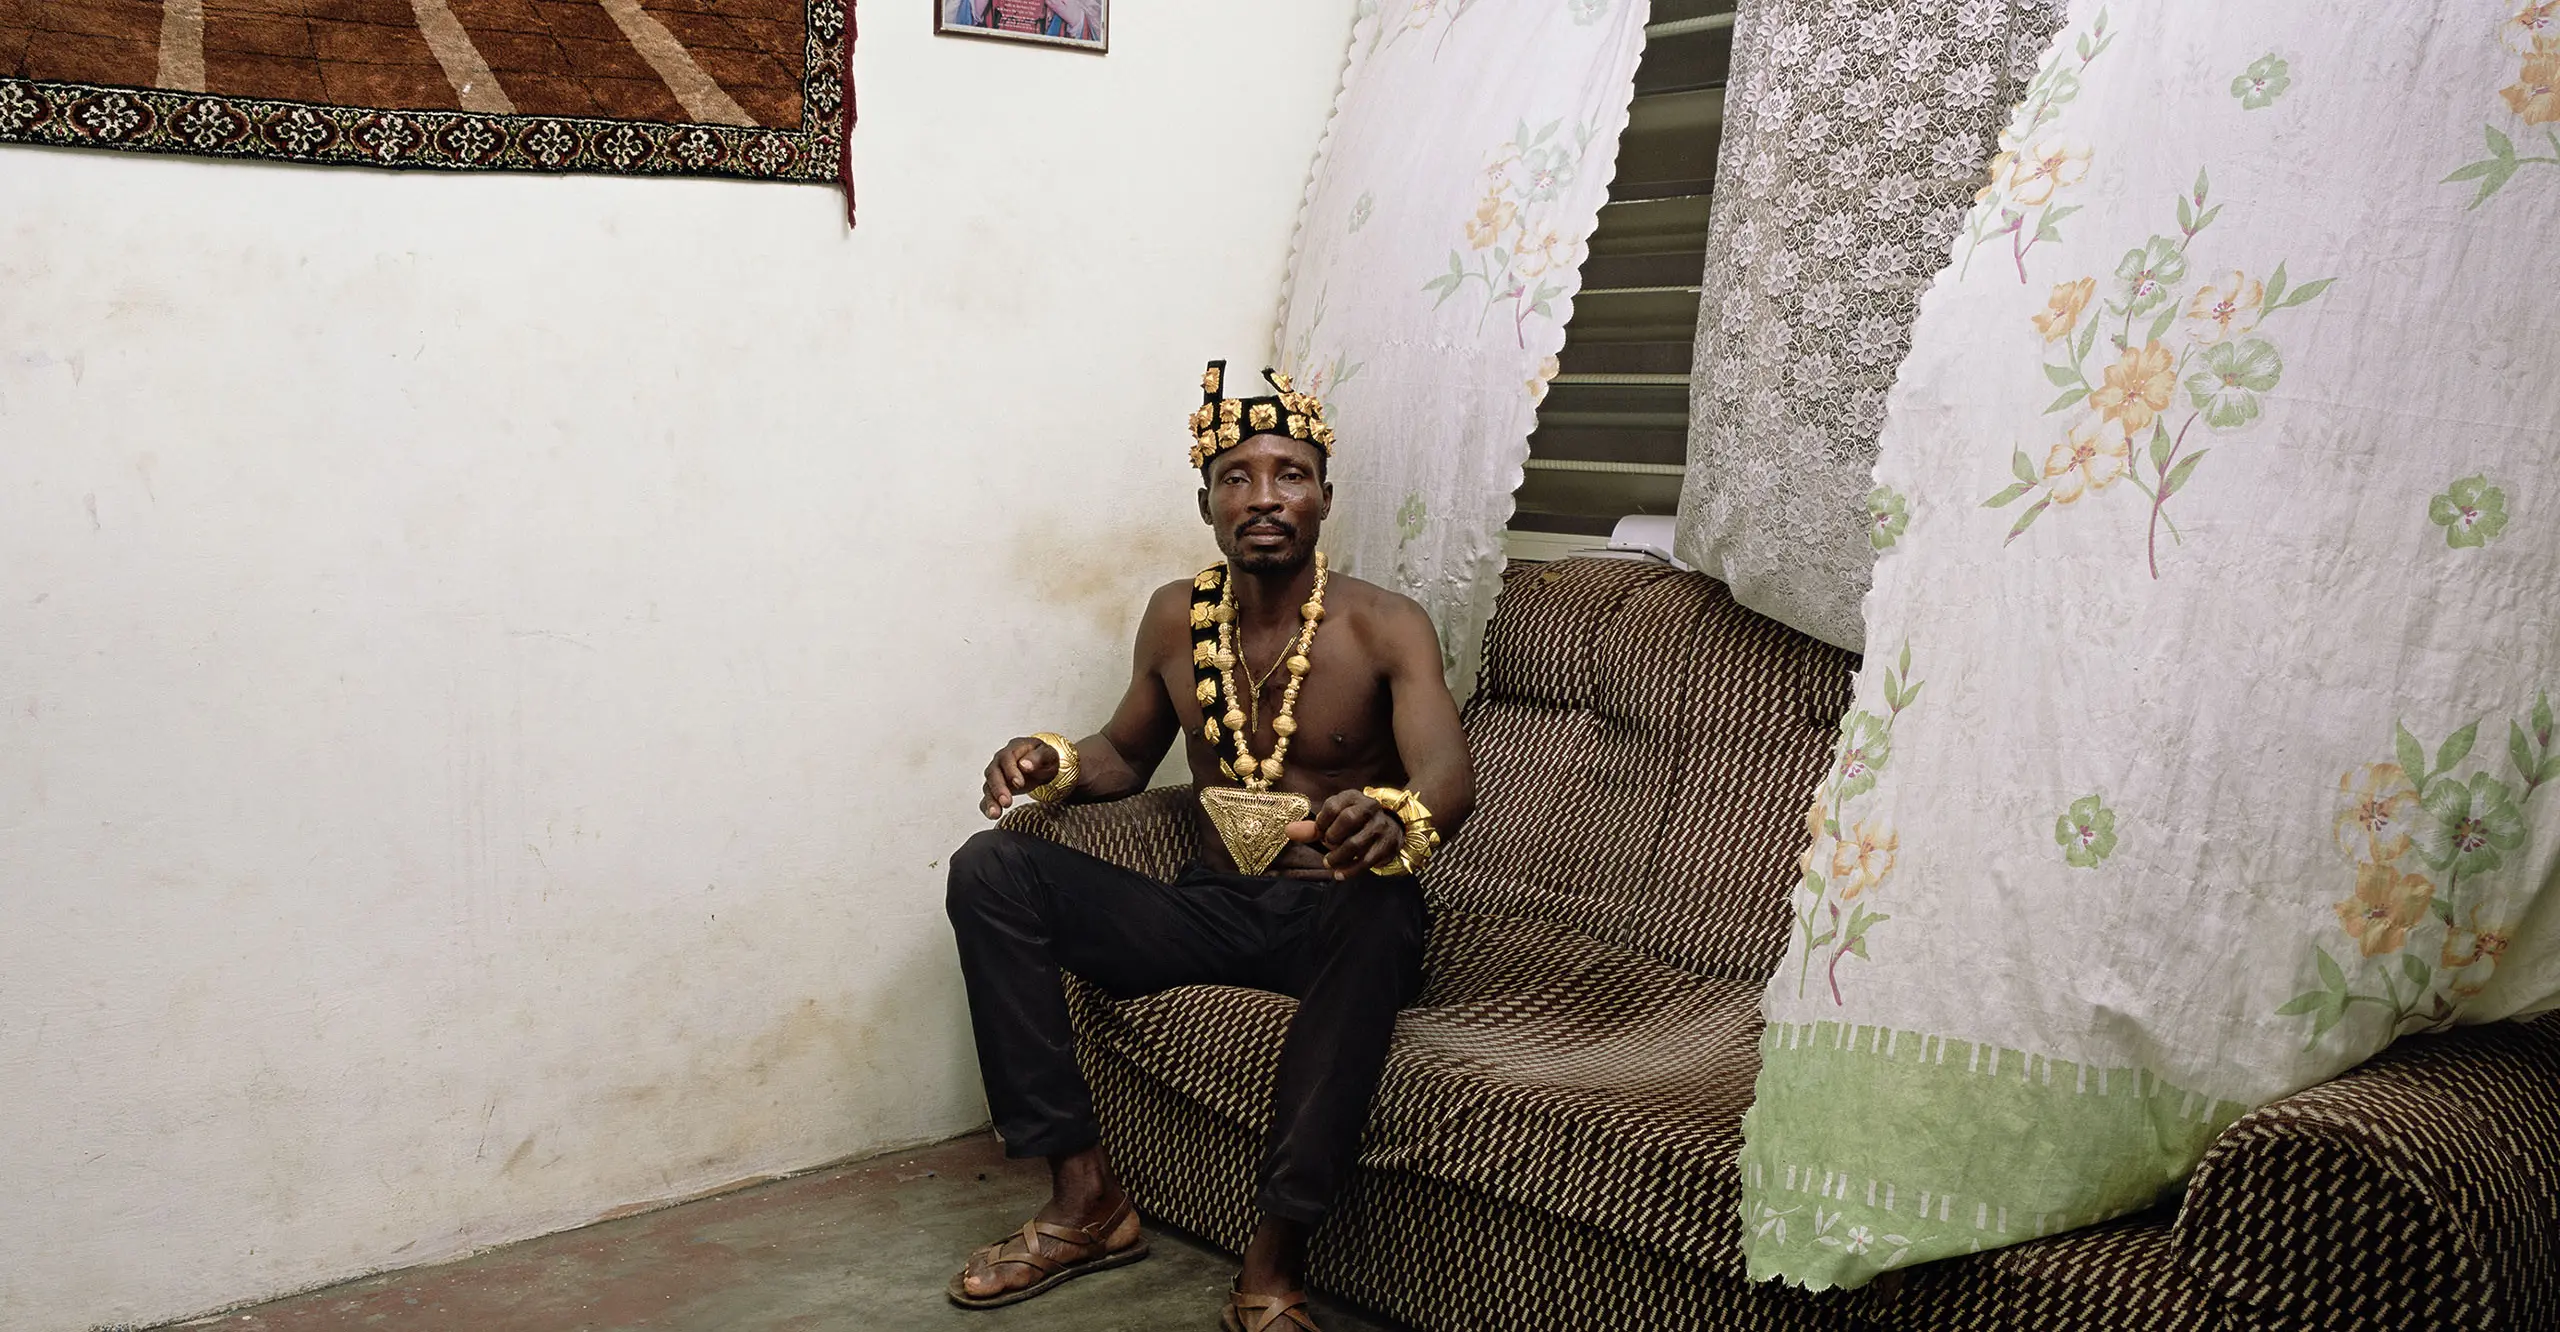 Man sitting on a sofa wearing a crown